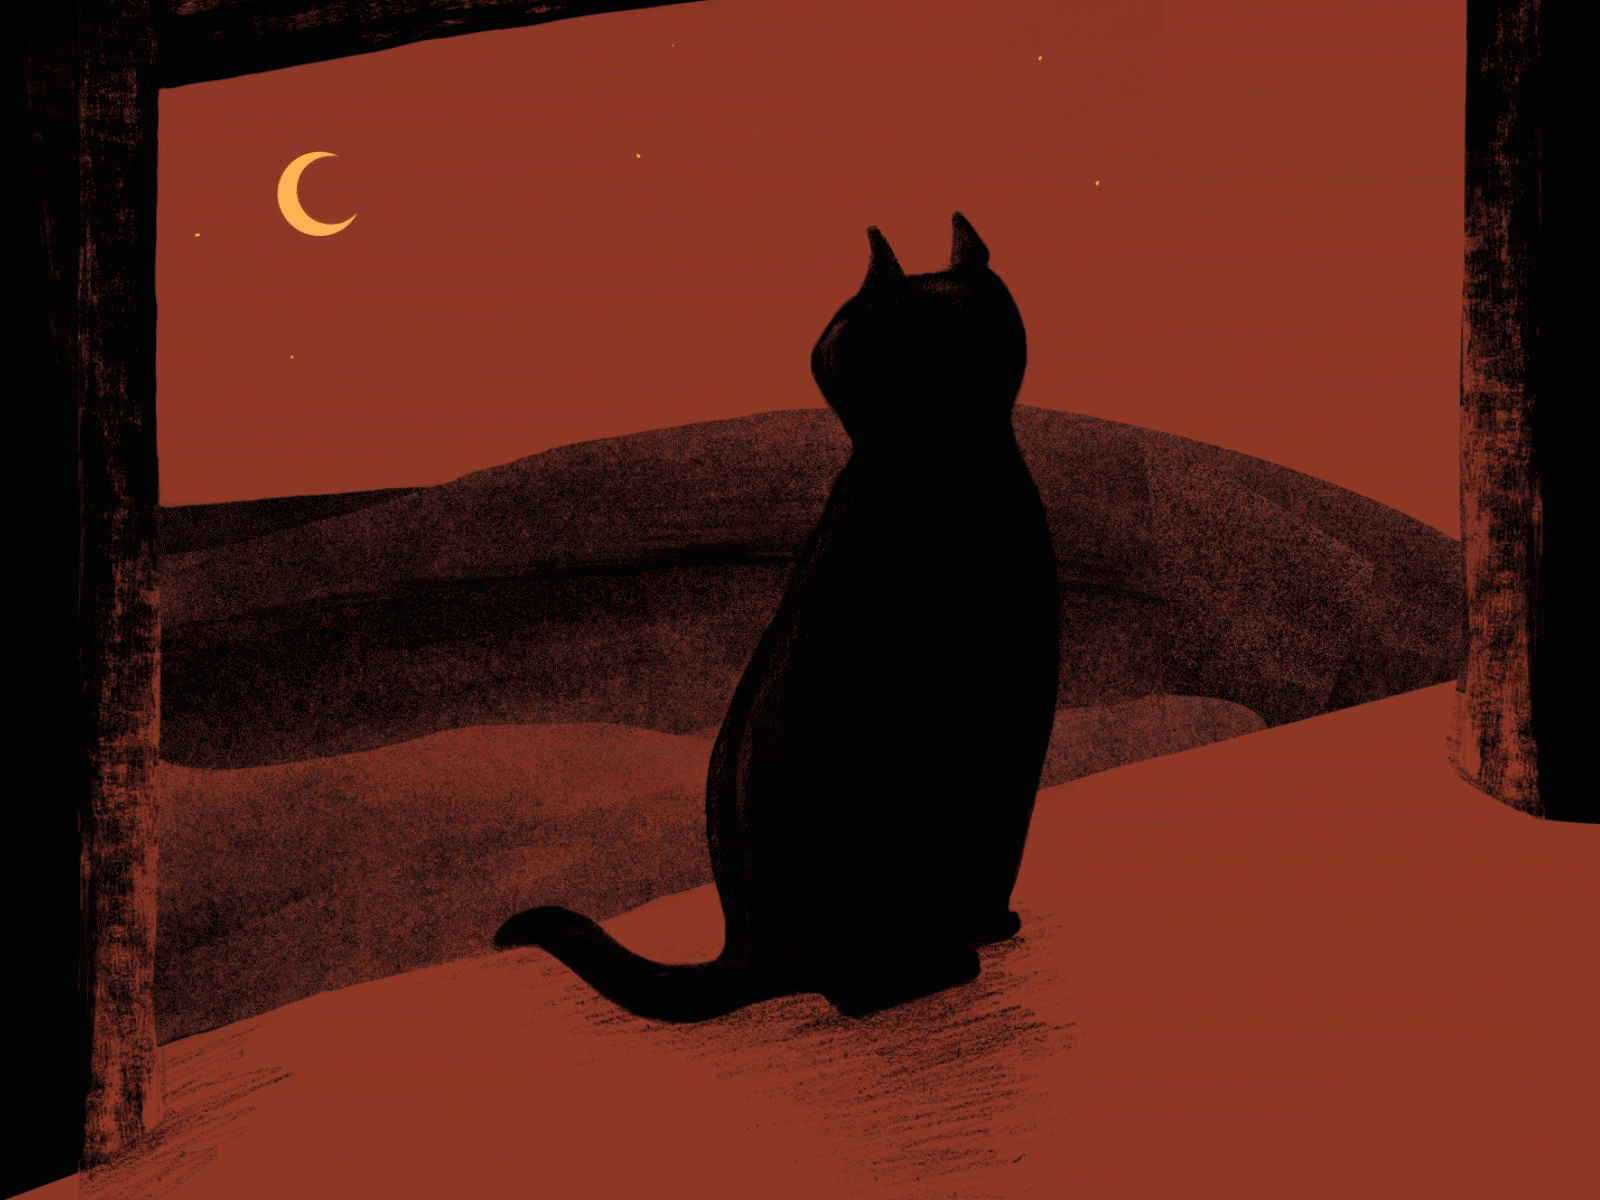 Windowsill 2d animation black cat design ear flick frame by frame illustration moon night sky red tail window